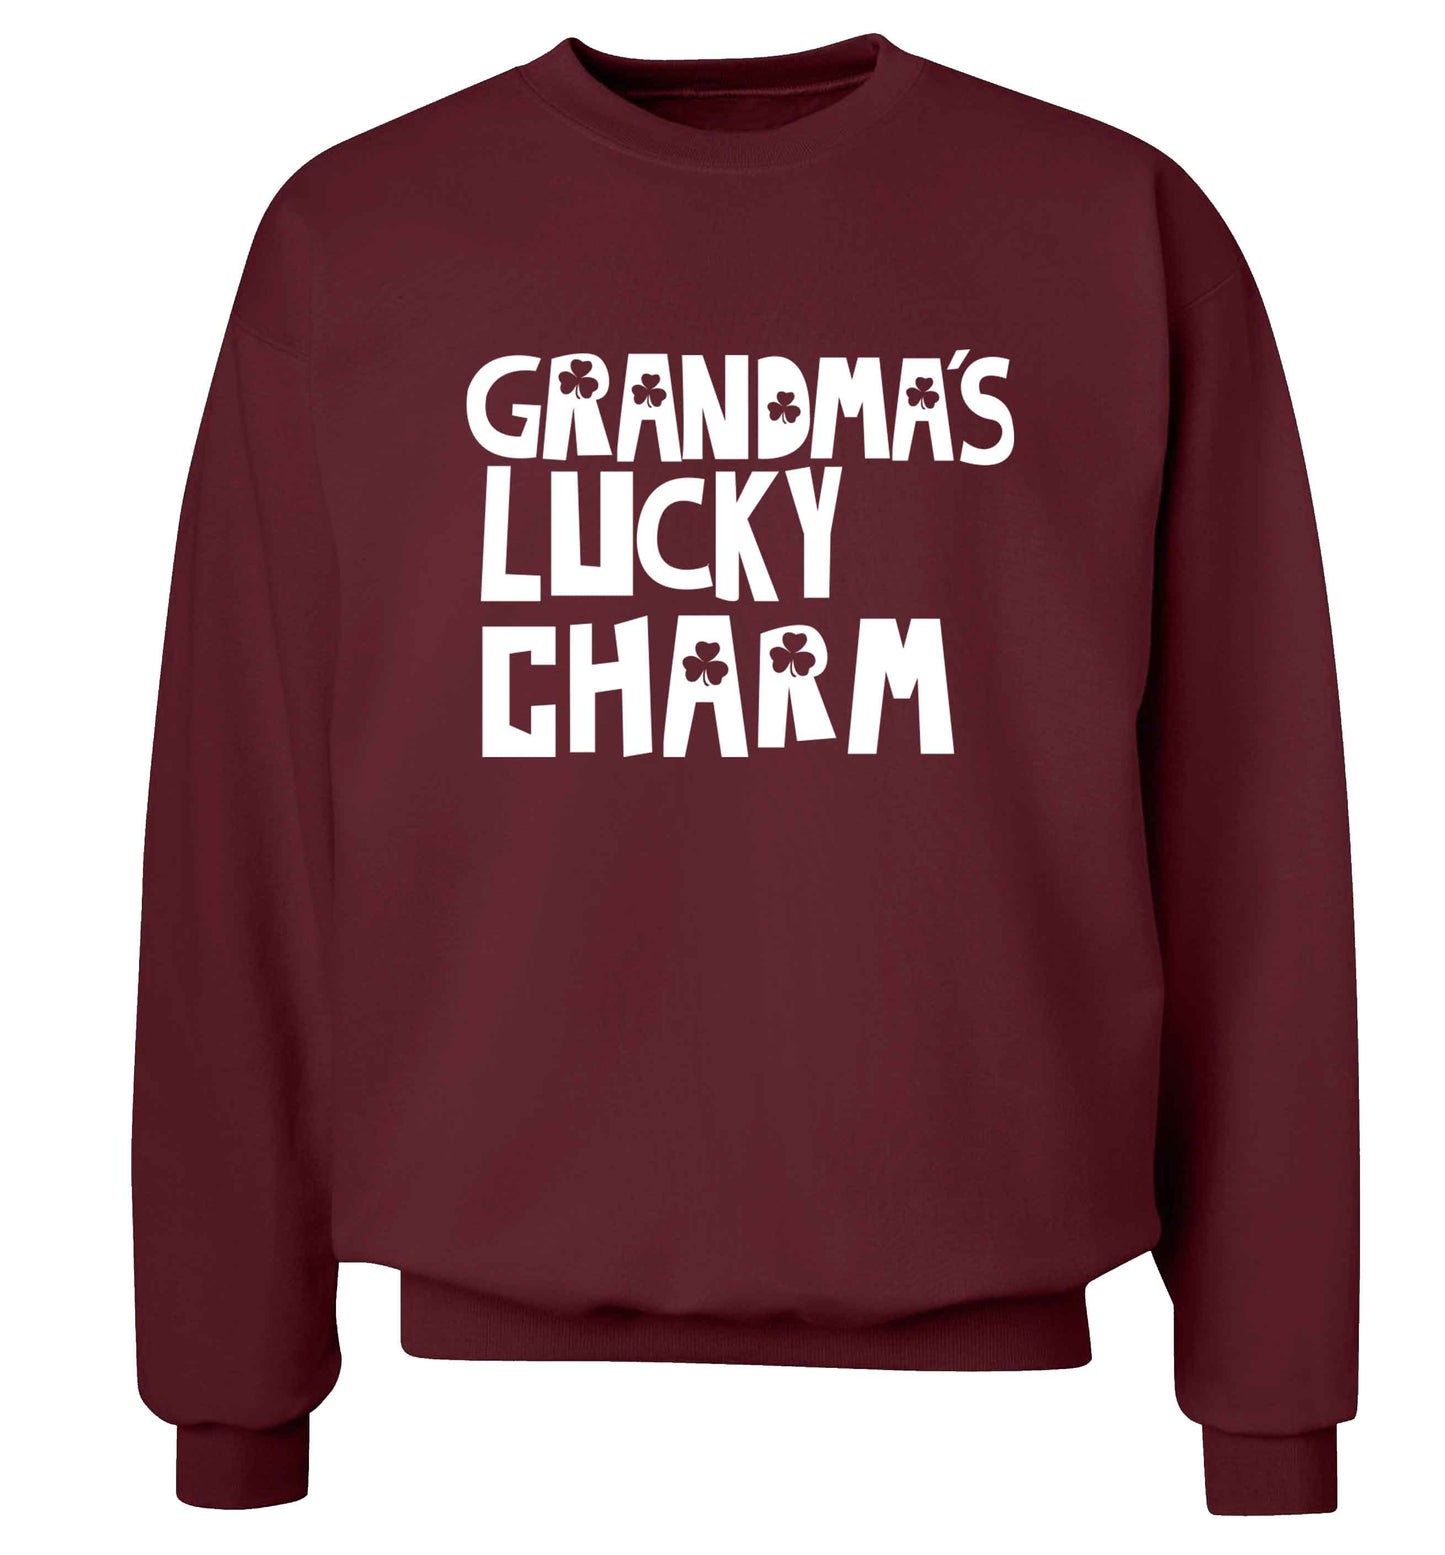 Grandma's lucky charm adult's unisex maroon sweater 2XL